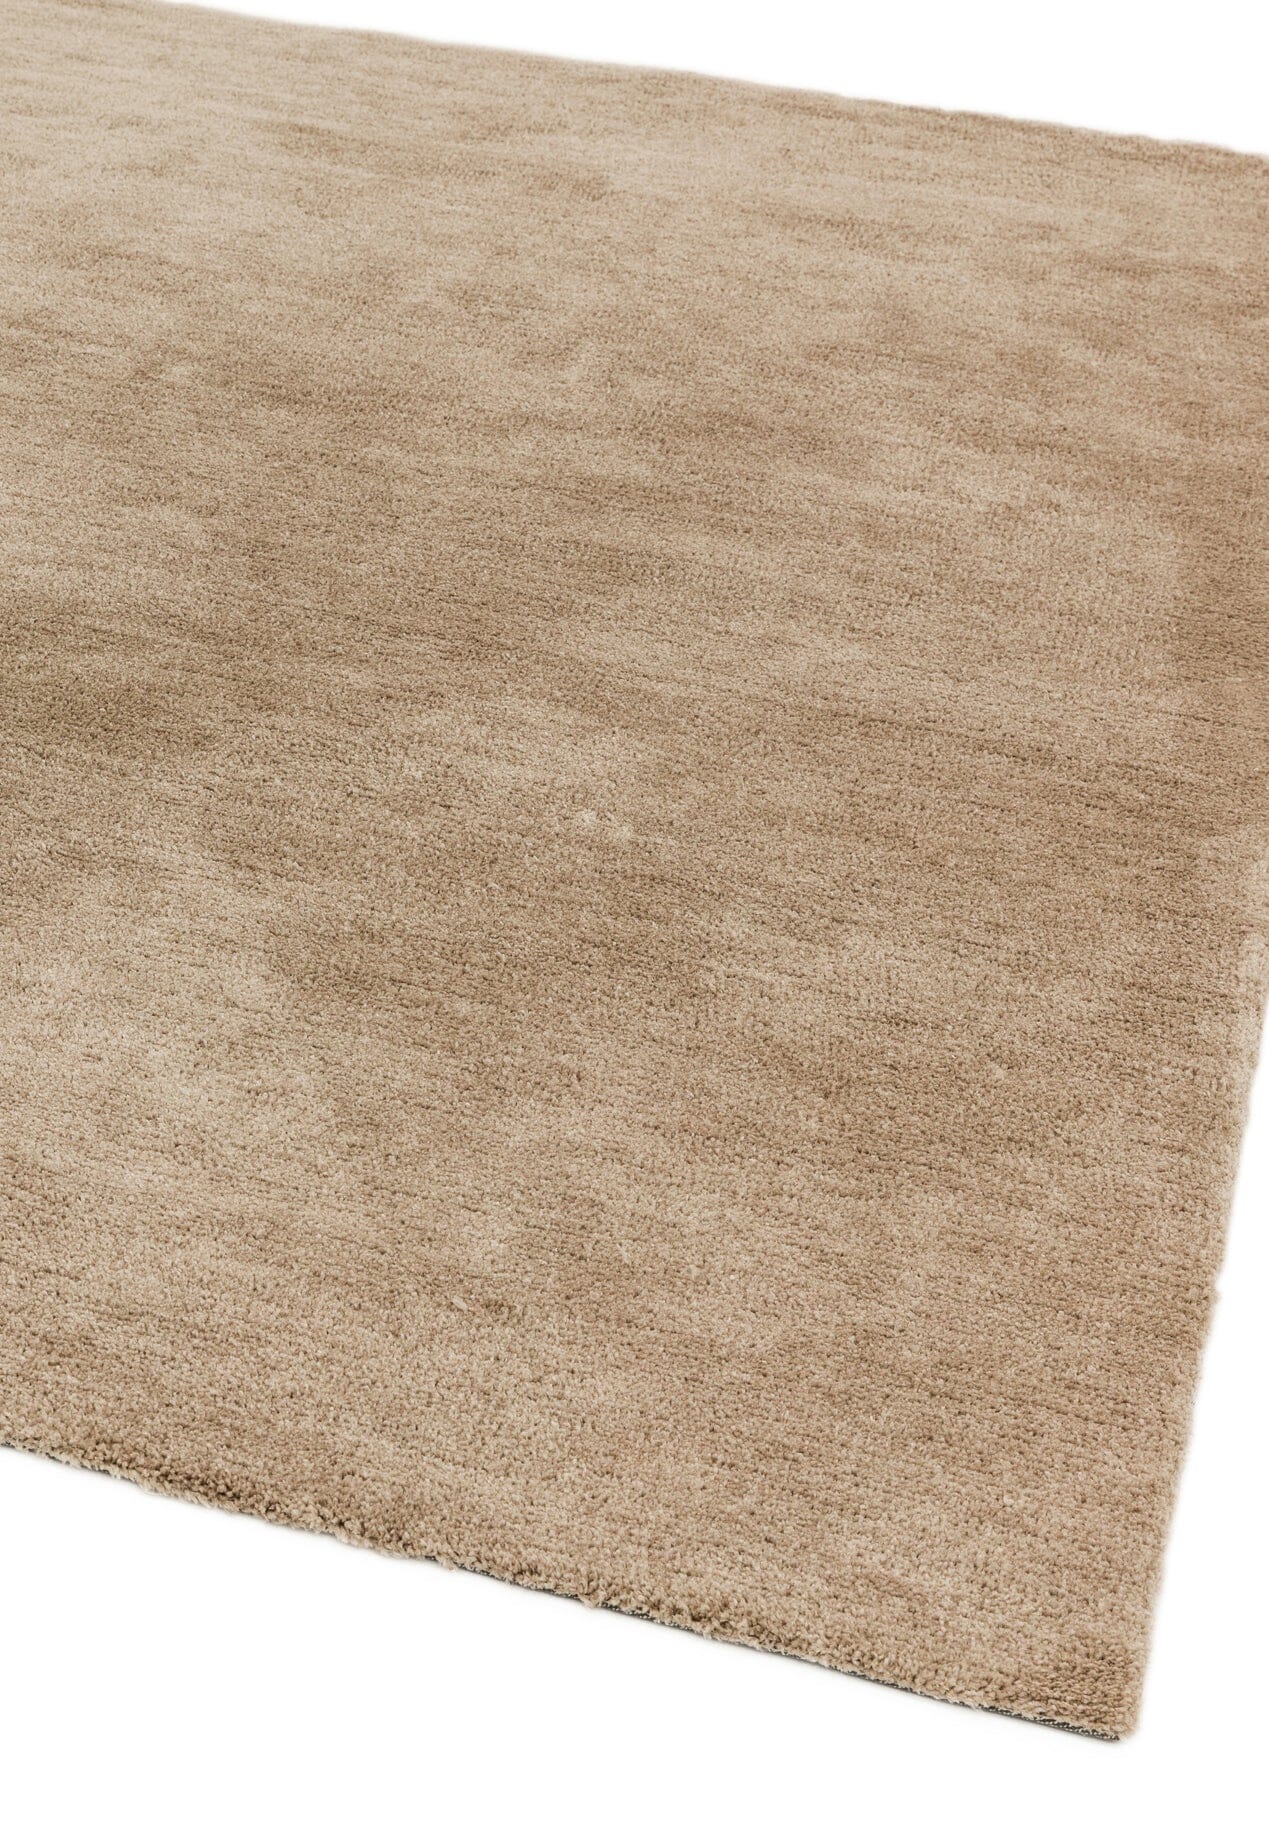  Asiatic Carpets-Asiatic Carpets Milo Table Tufted Rug Sand - 160 x 230cm-Beige, Natural 677 